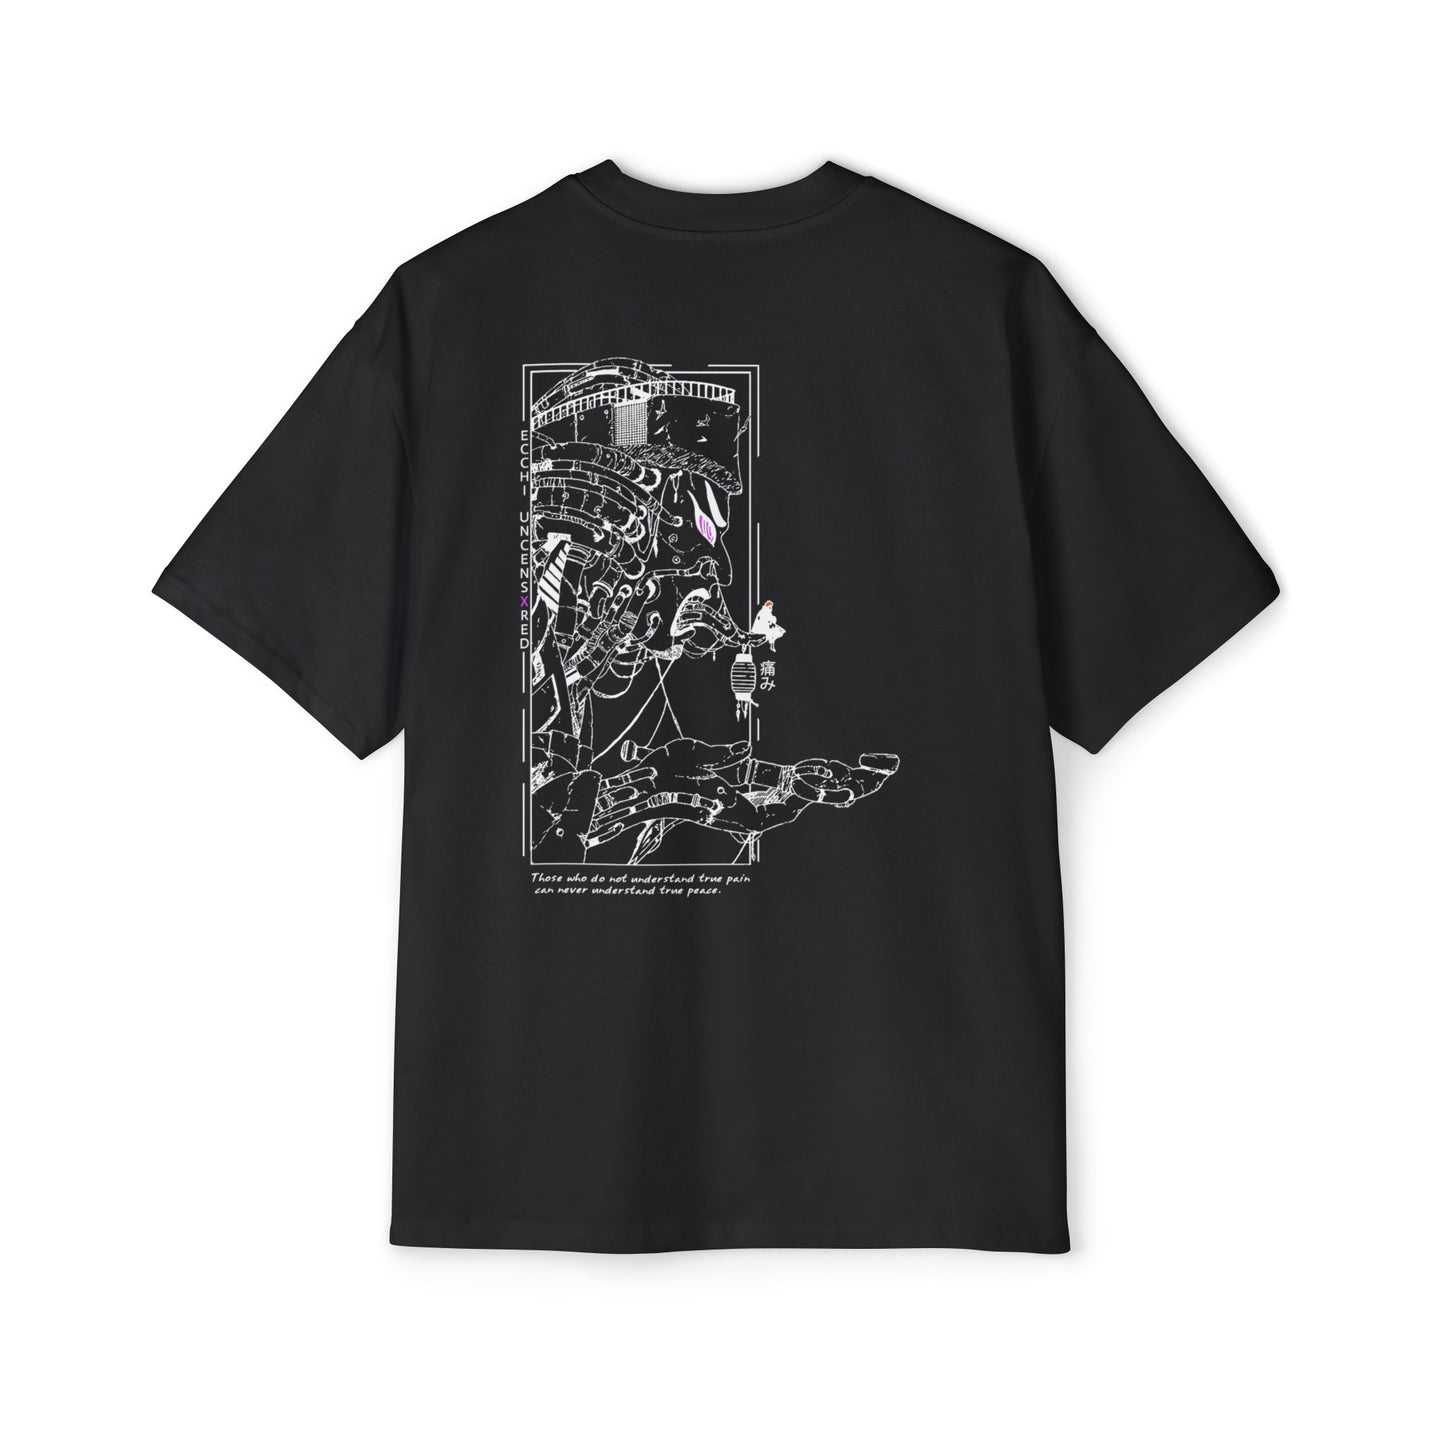 Pain Mech • Over Sized T-Shirt • Print